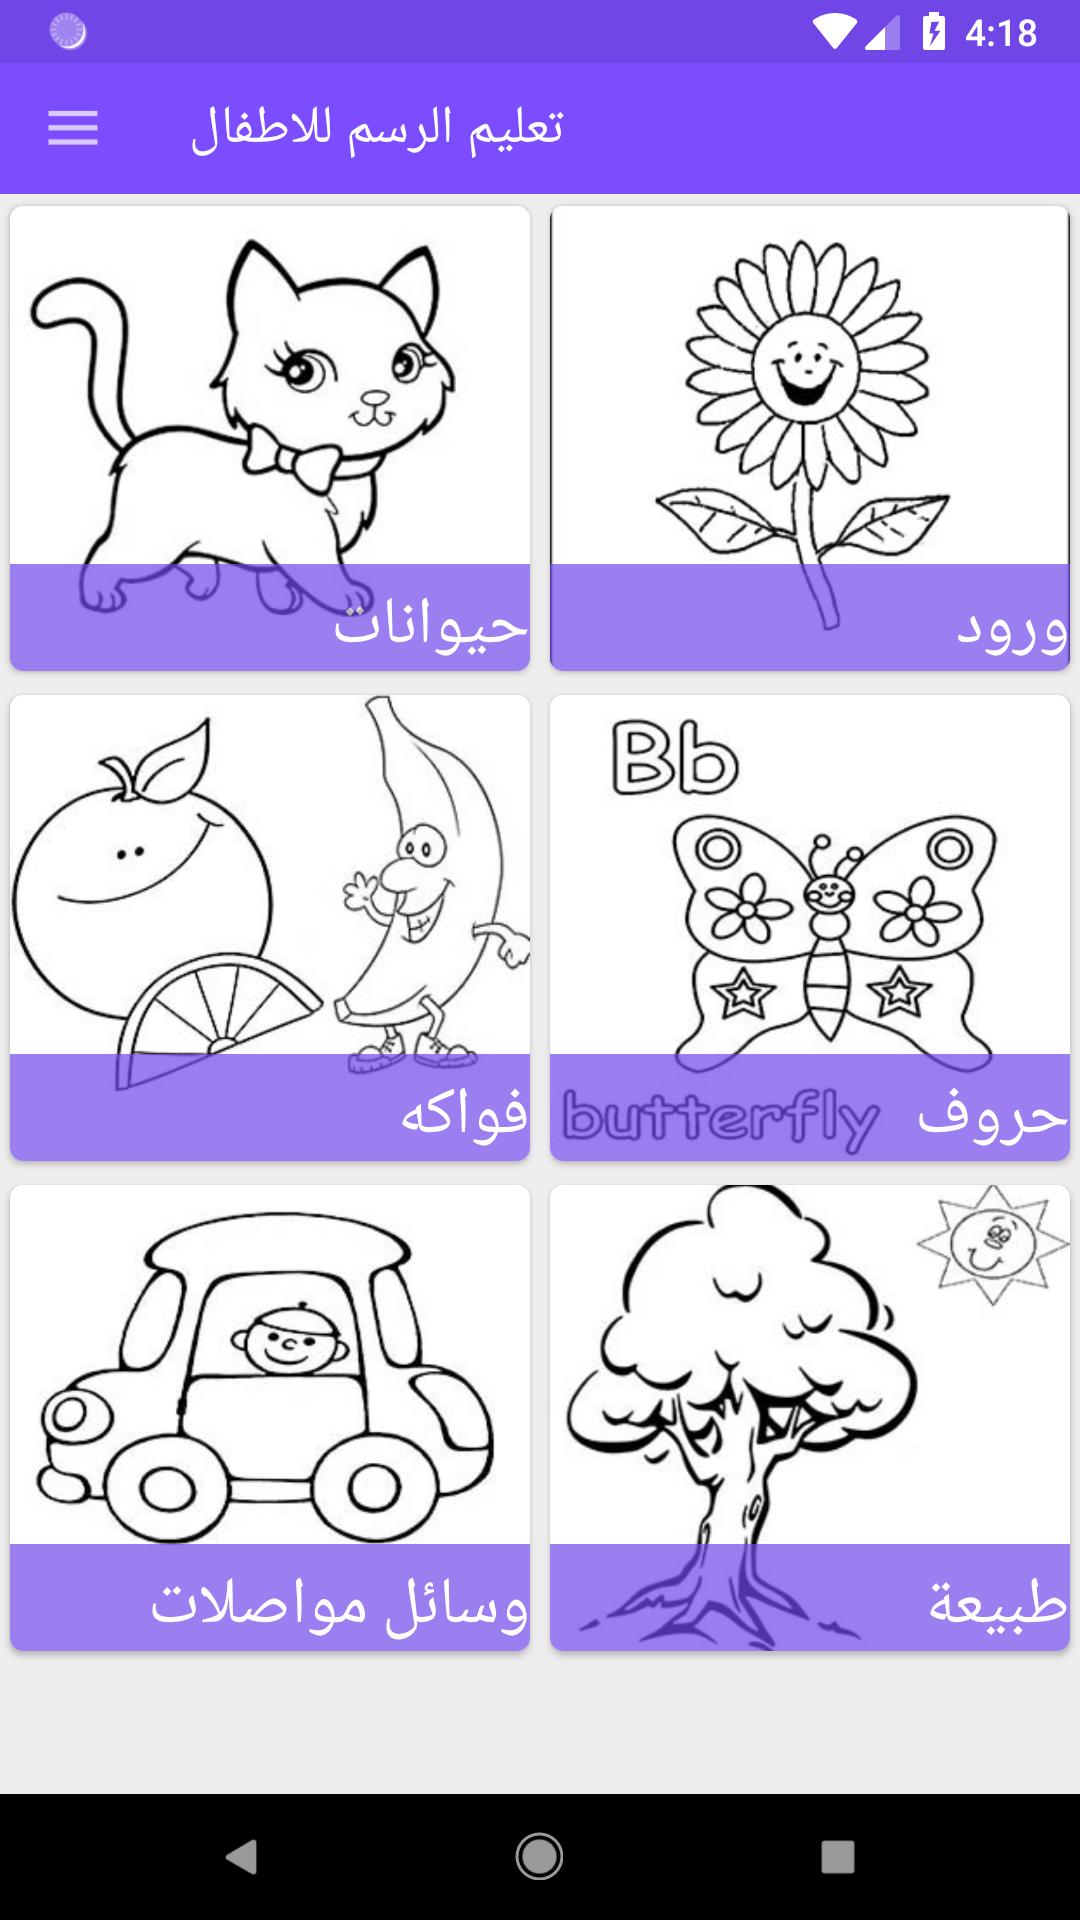 تعليم الرسم للاطفال for Android - APK Download